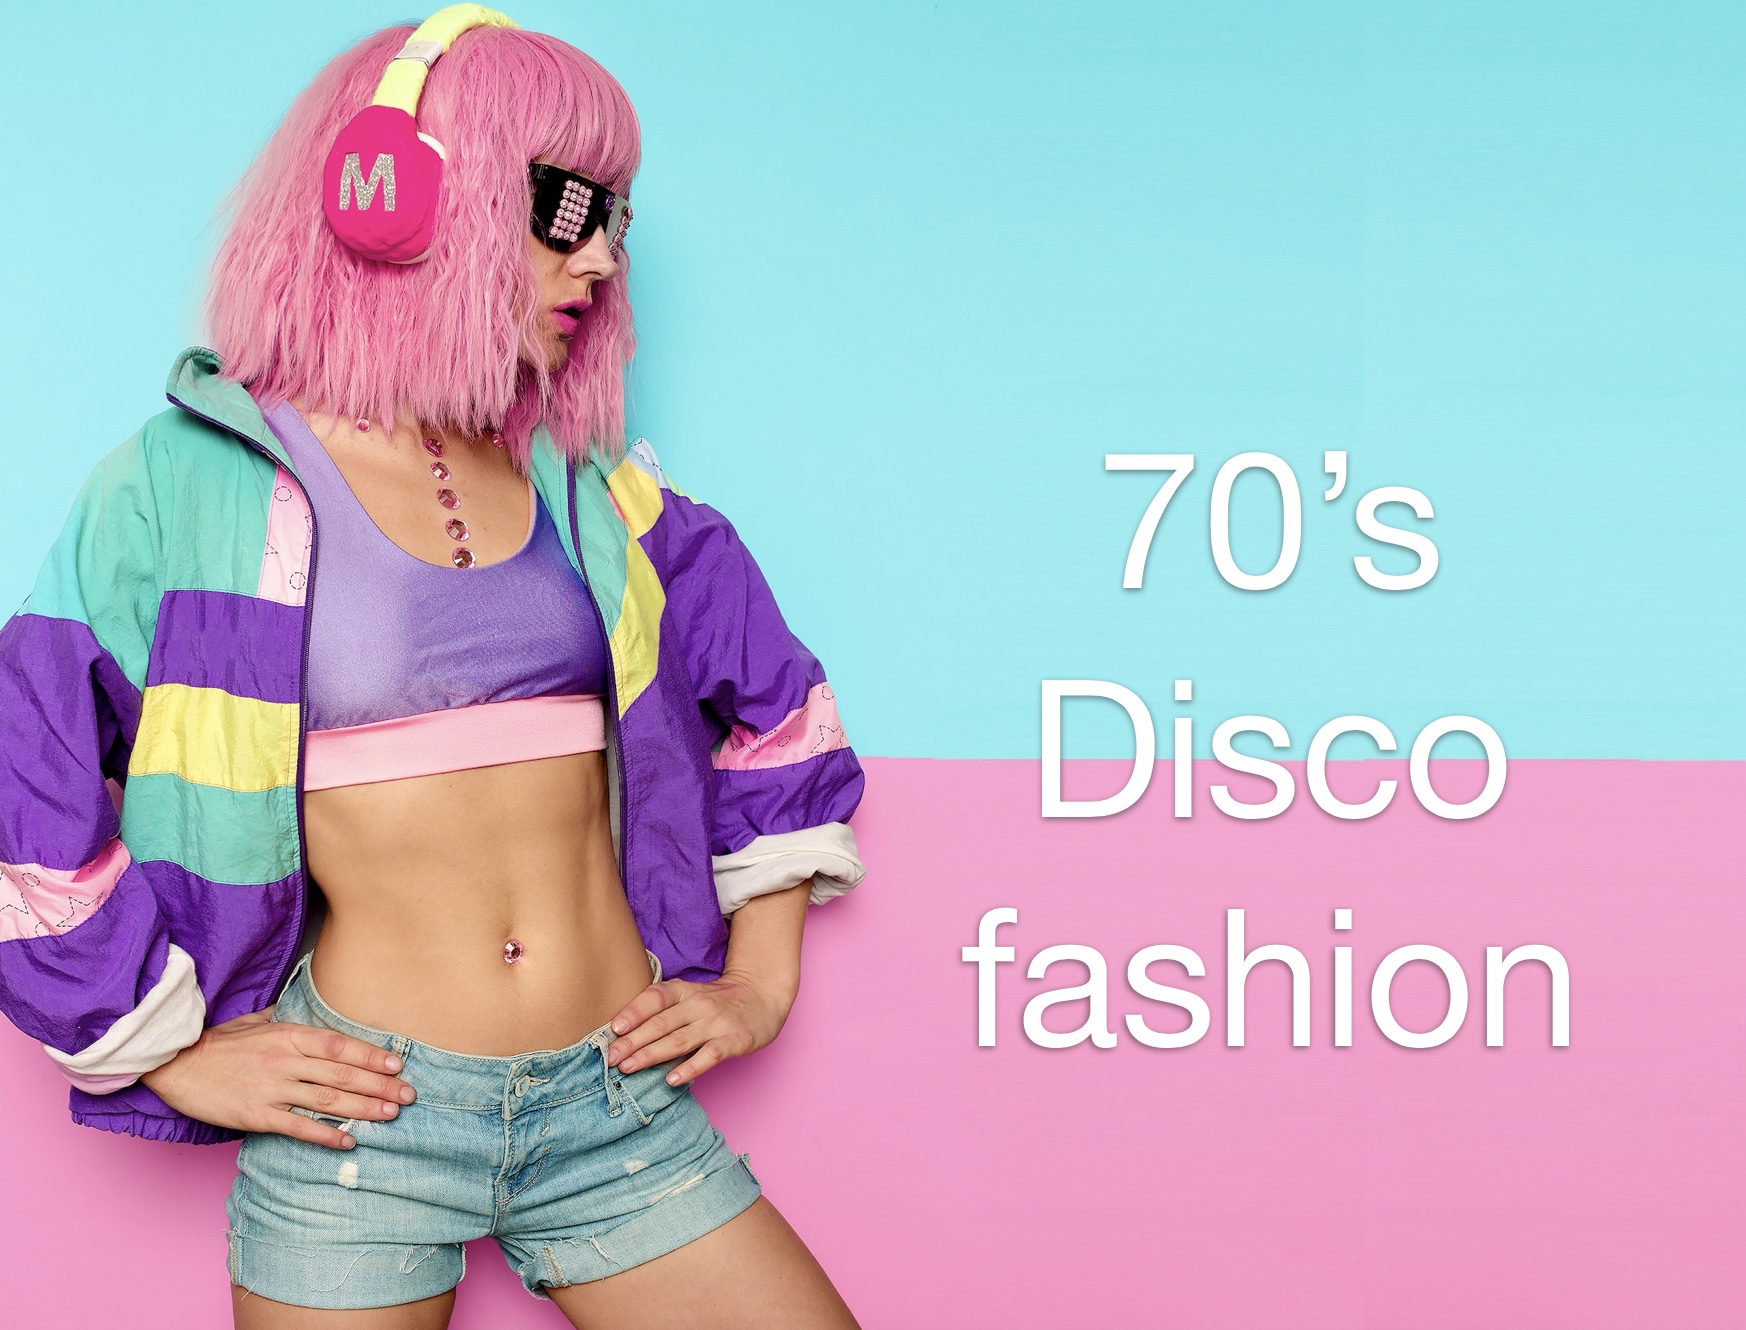 70s Disco fashion - 10 ways to wear disco fashion from the 70s